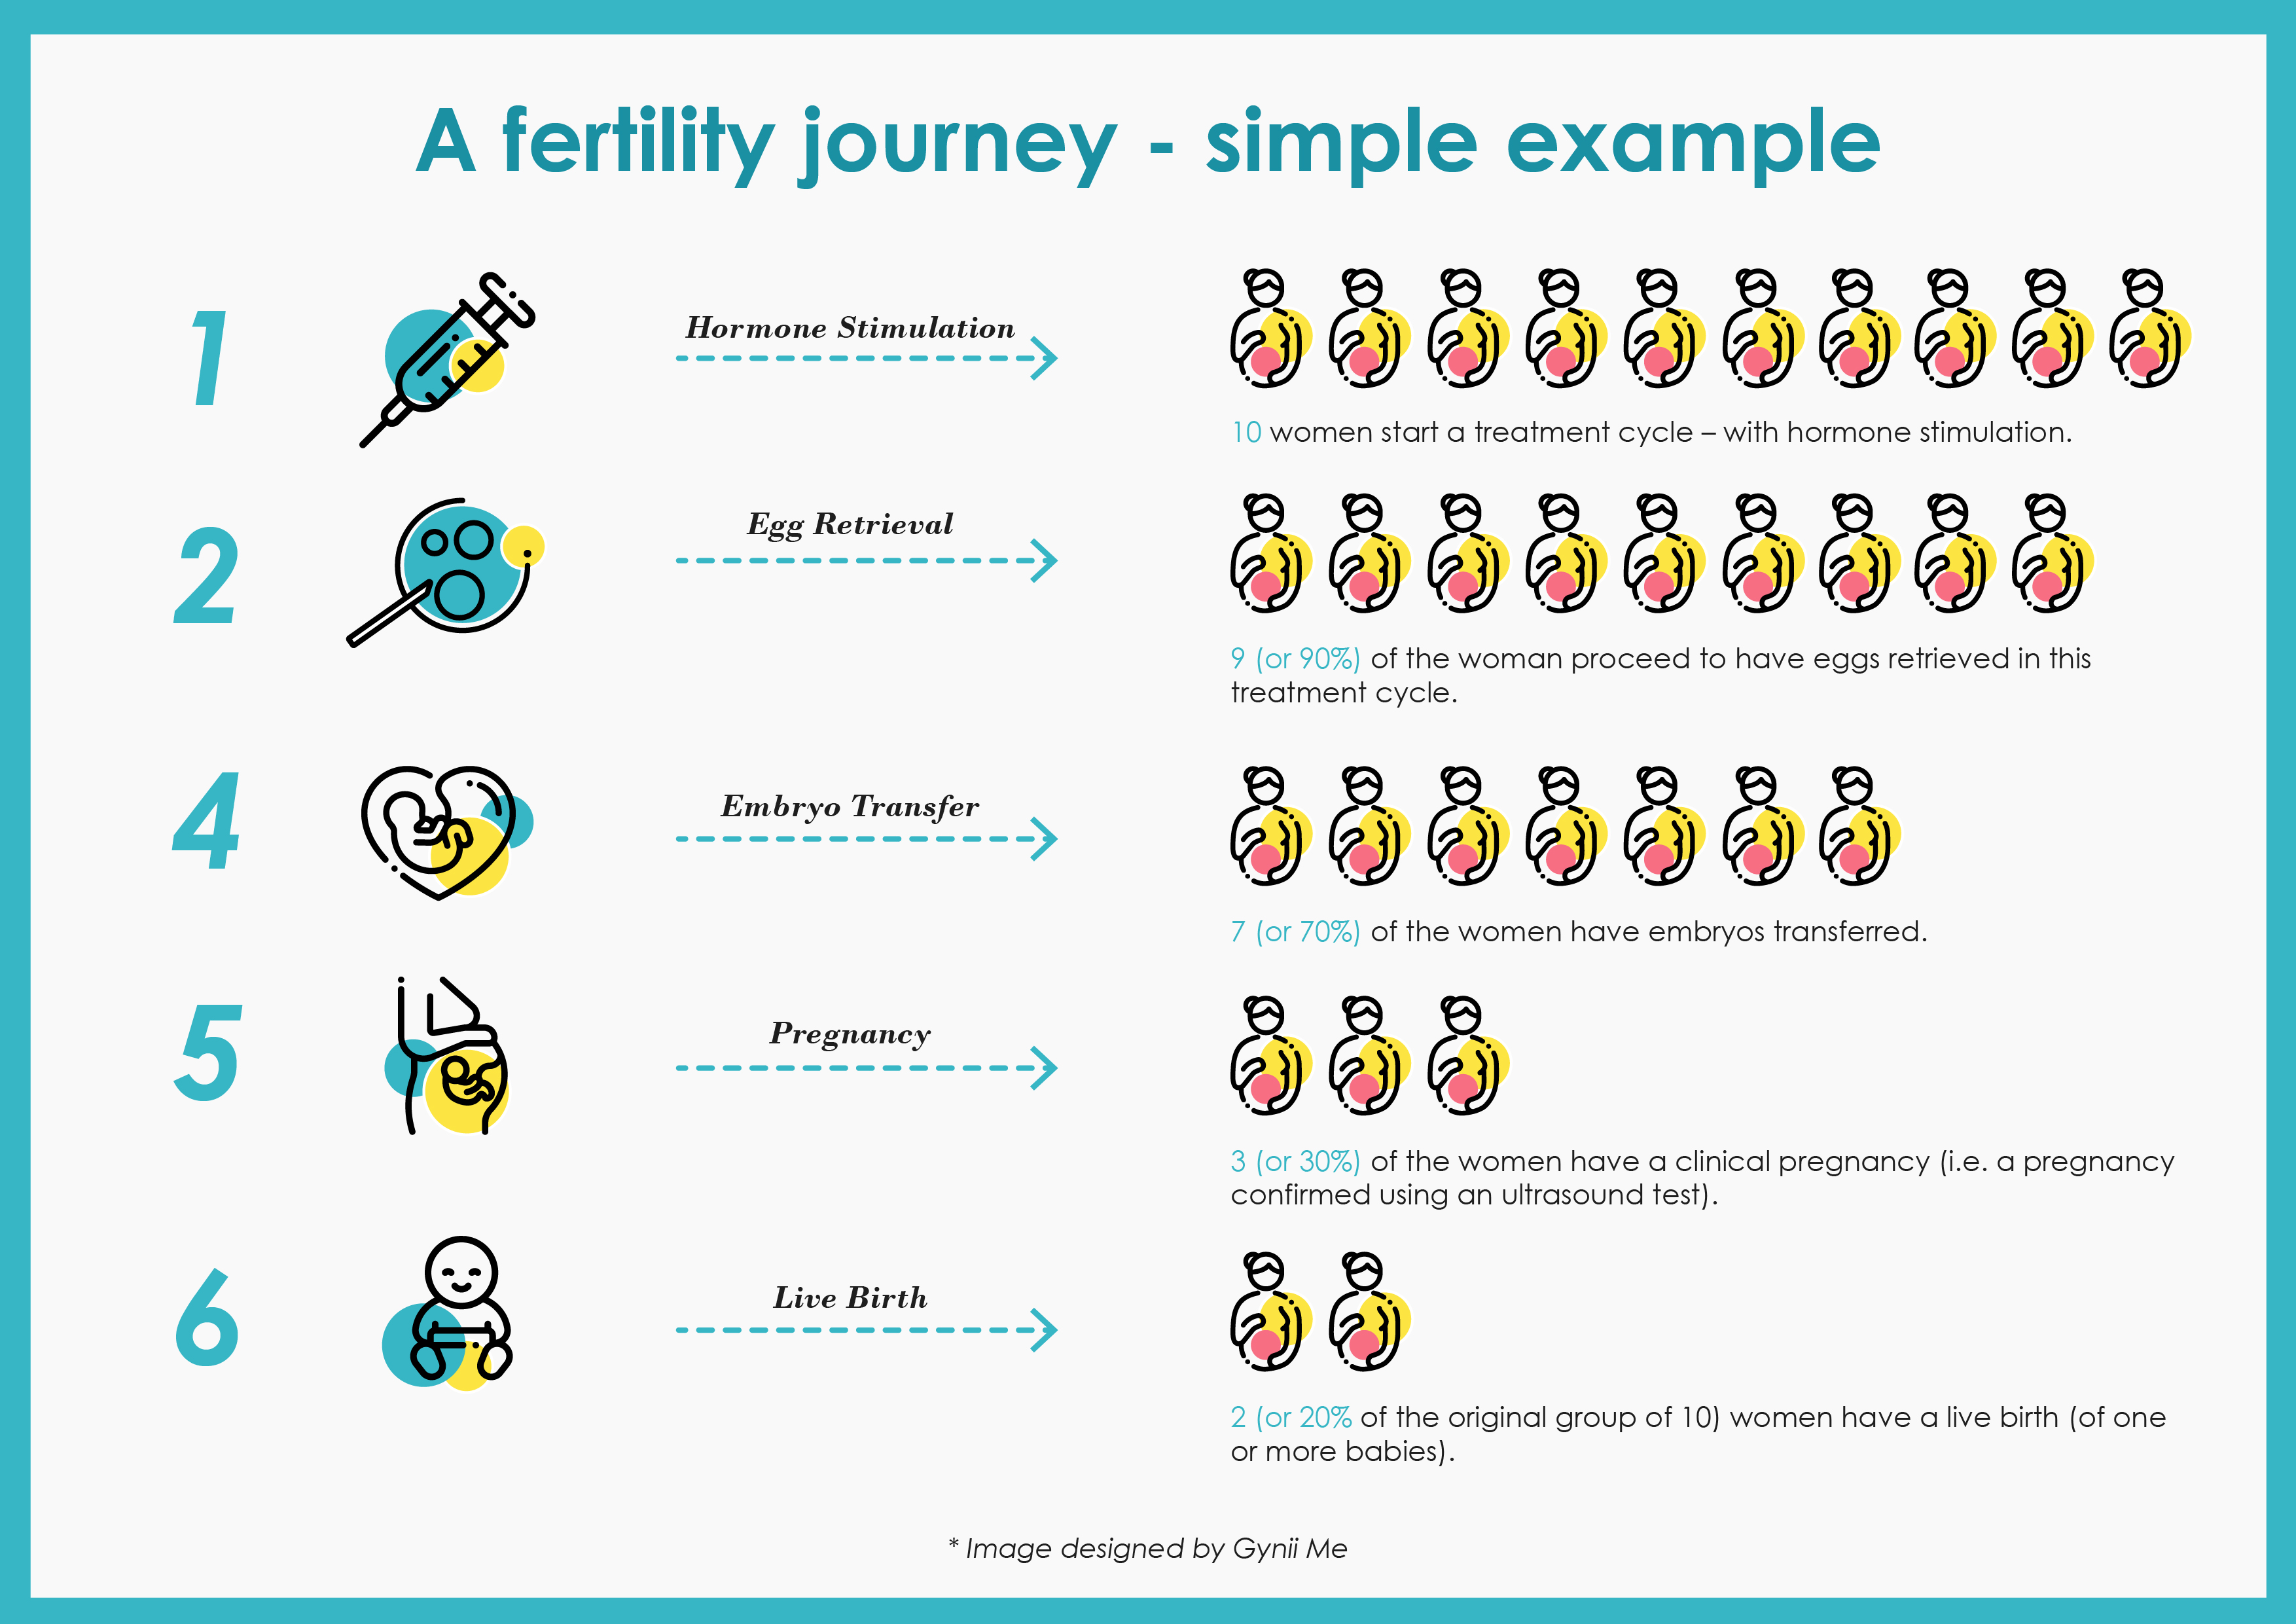 A fertility journey